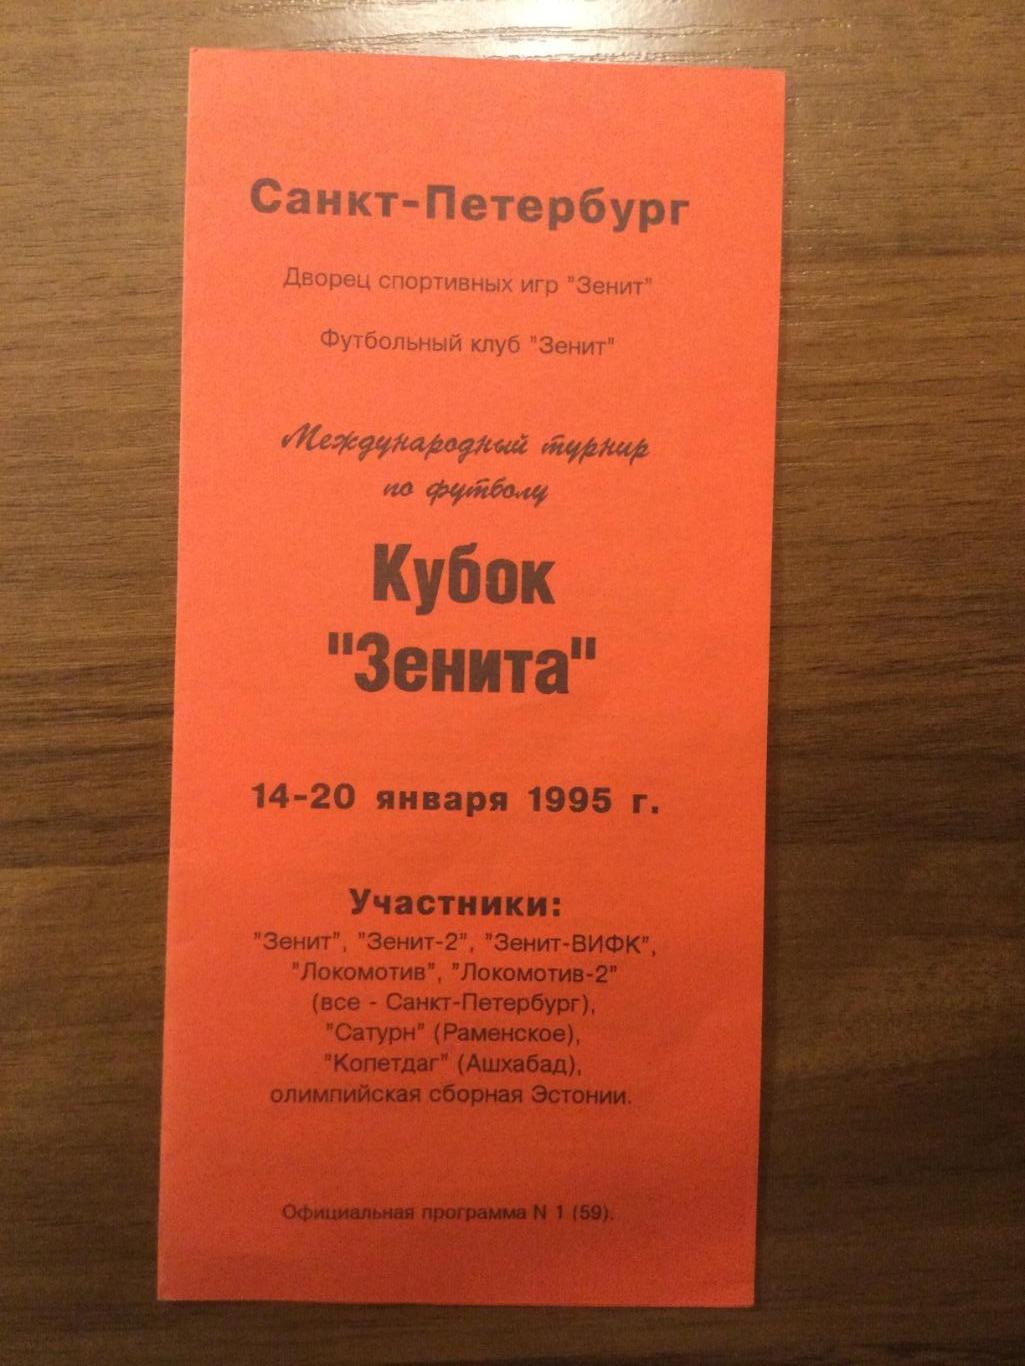 Кубок Зенит (Санкт-Петербург) 1995 локомотив Сатурн Копетдаг Эстония 1995